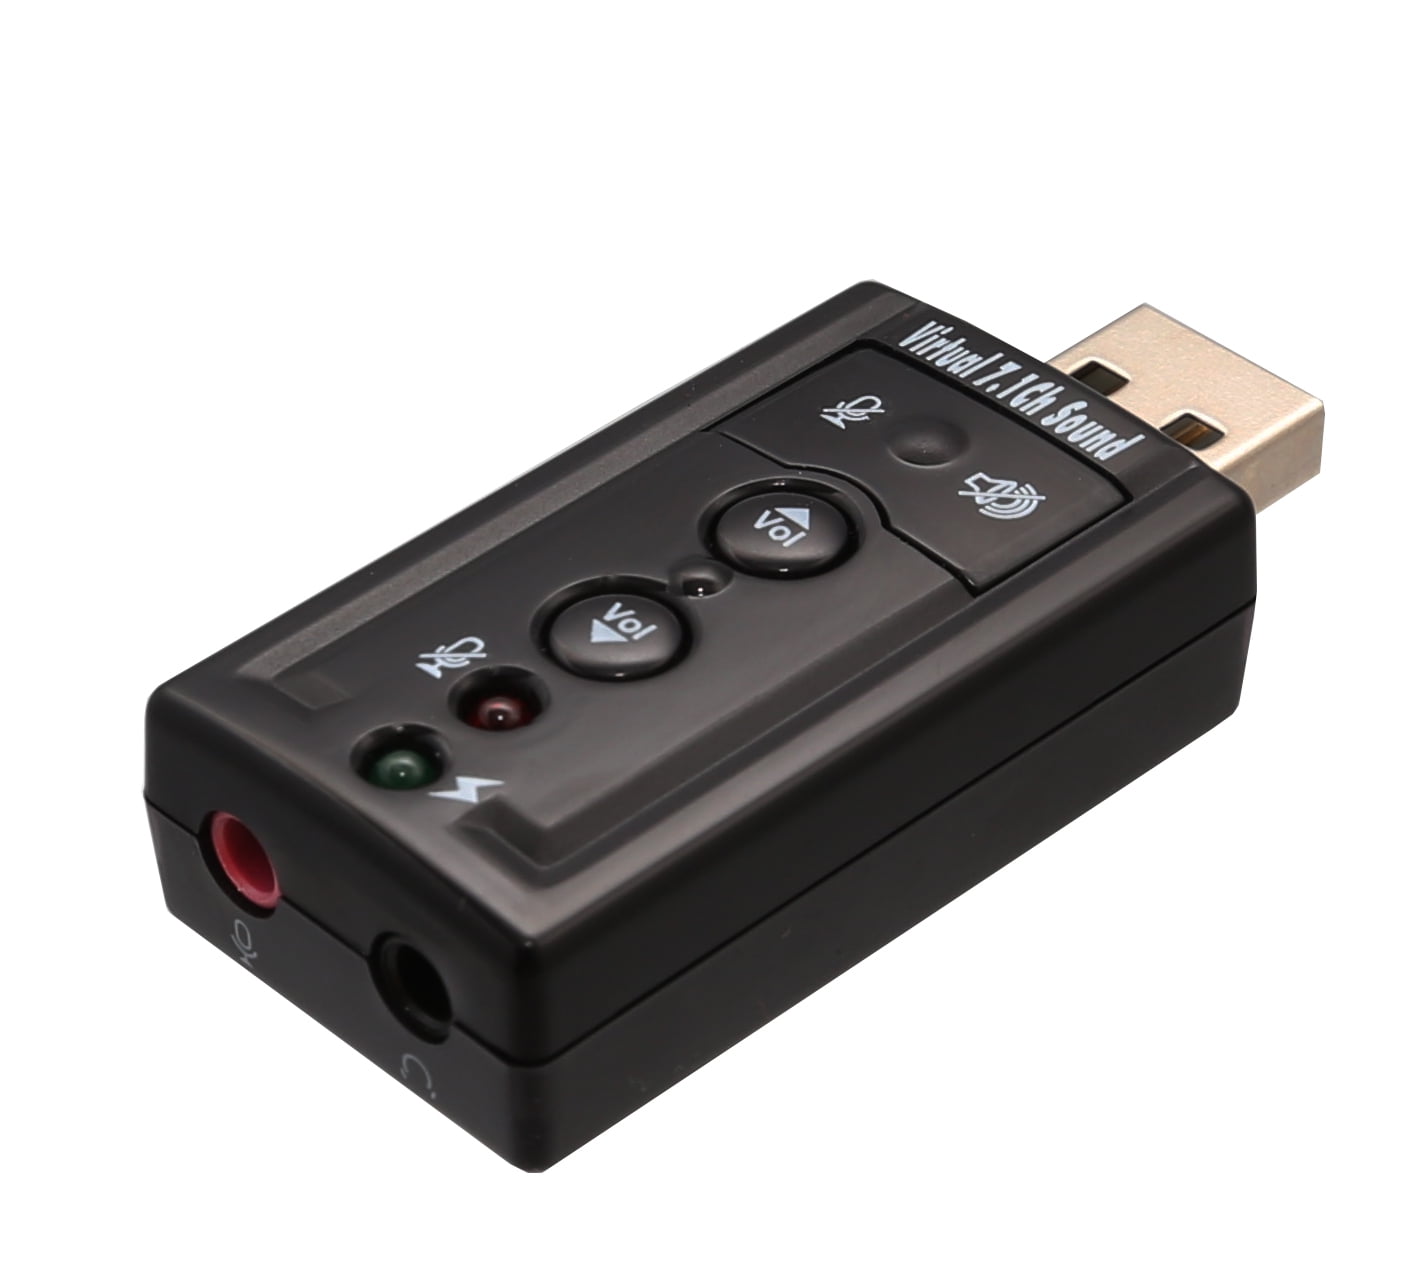 USB Stereo + SPDIF Combo Adapter, Digital Output, VIA Chipset - Walmart.com